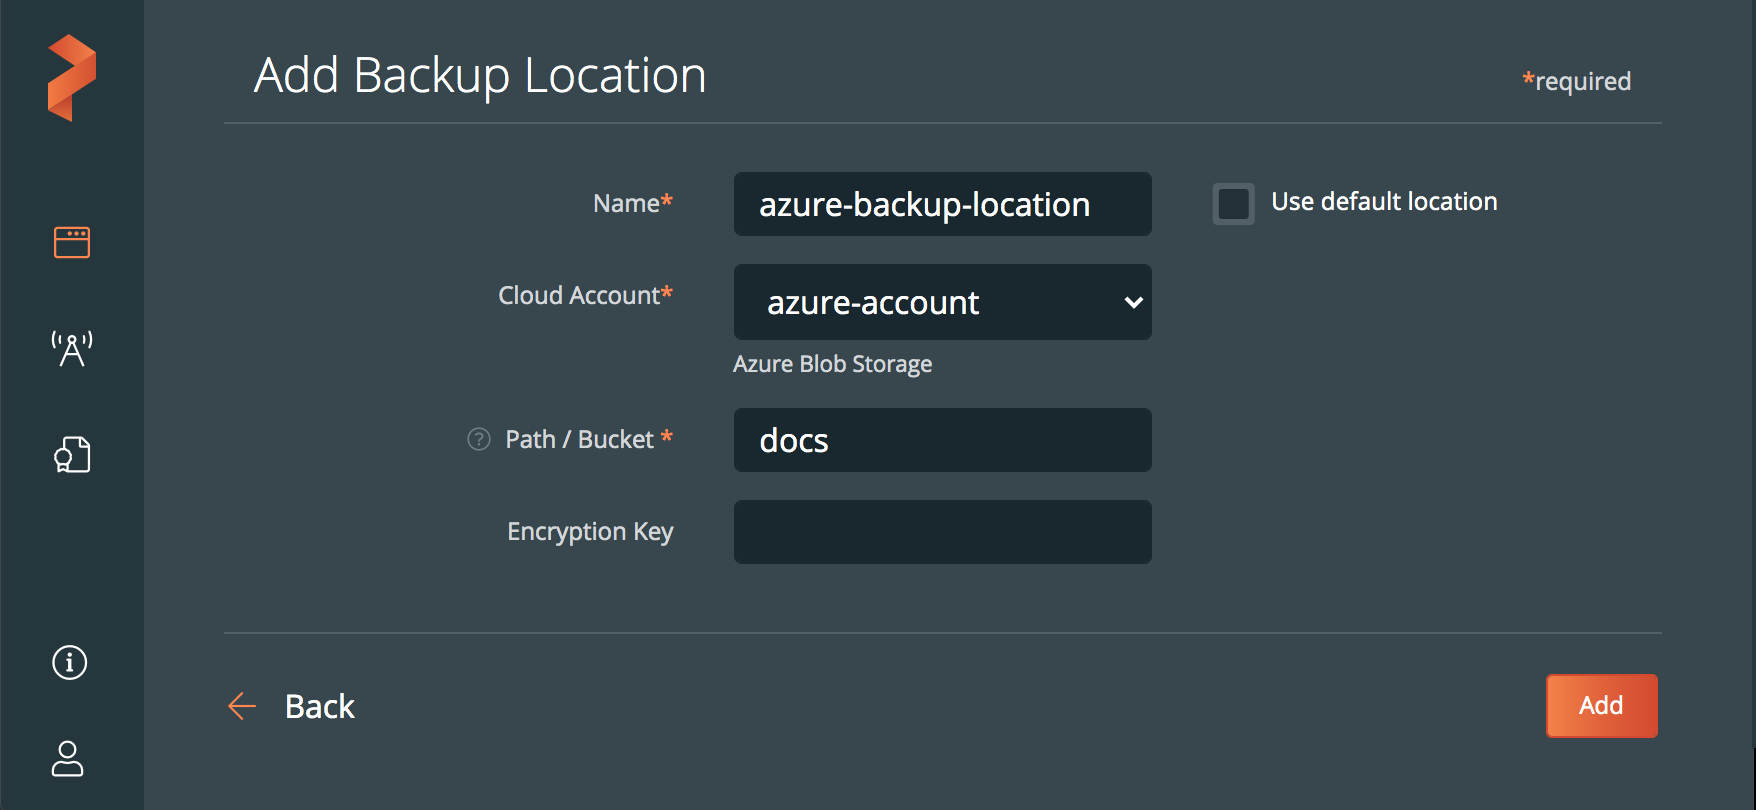 Configure an Azure backup location